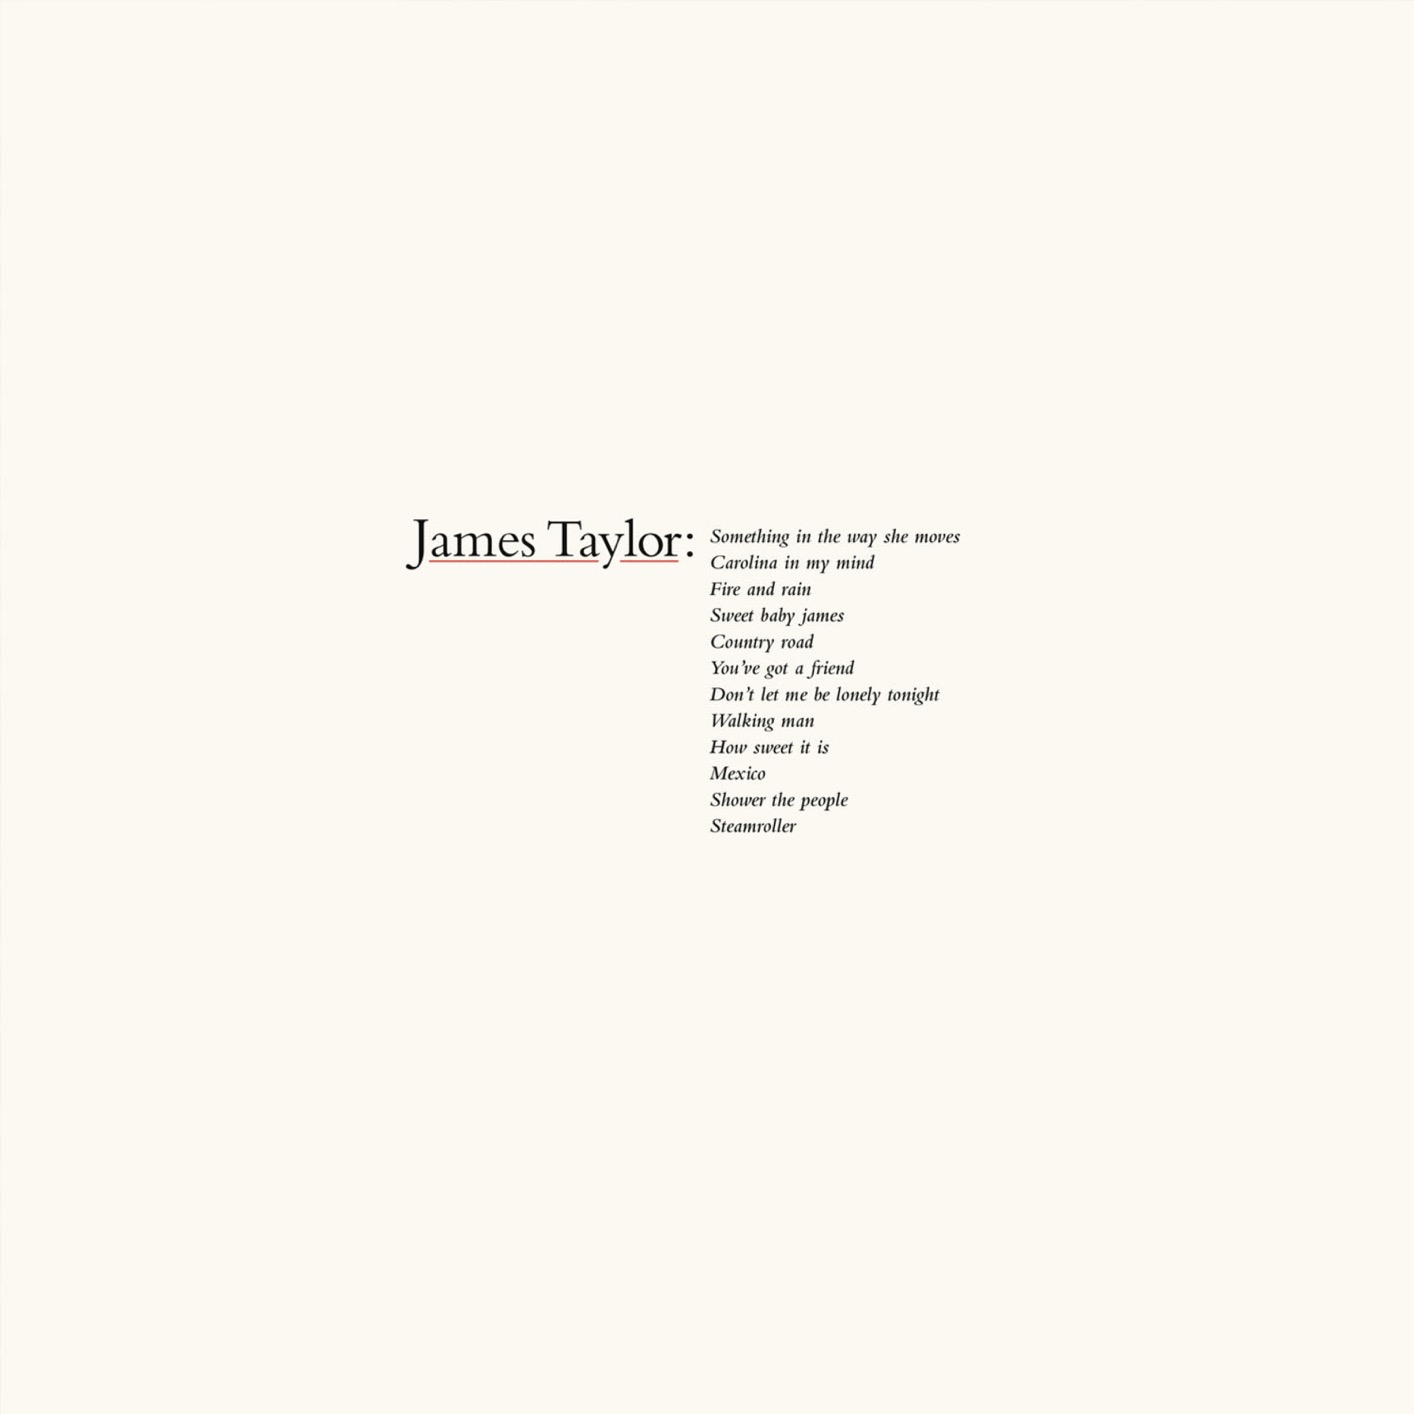 James Taylor – James Taylor’s Greatest Hits (2019 Remaster) (2020) [FLAC 24bit/192kHz]